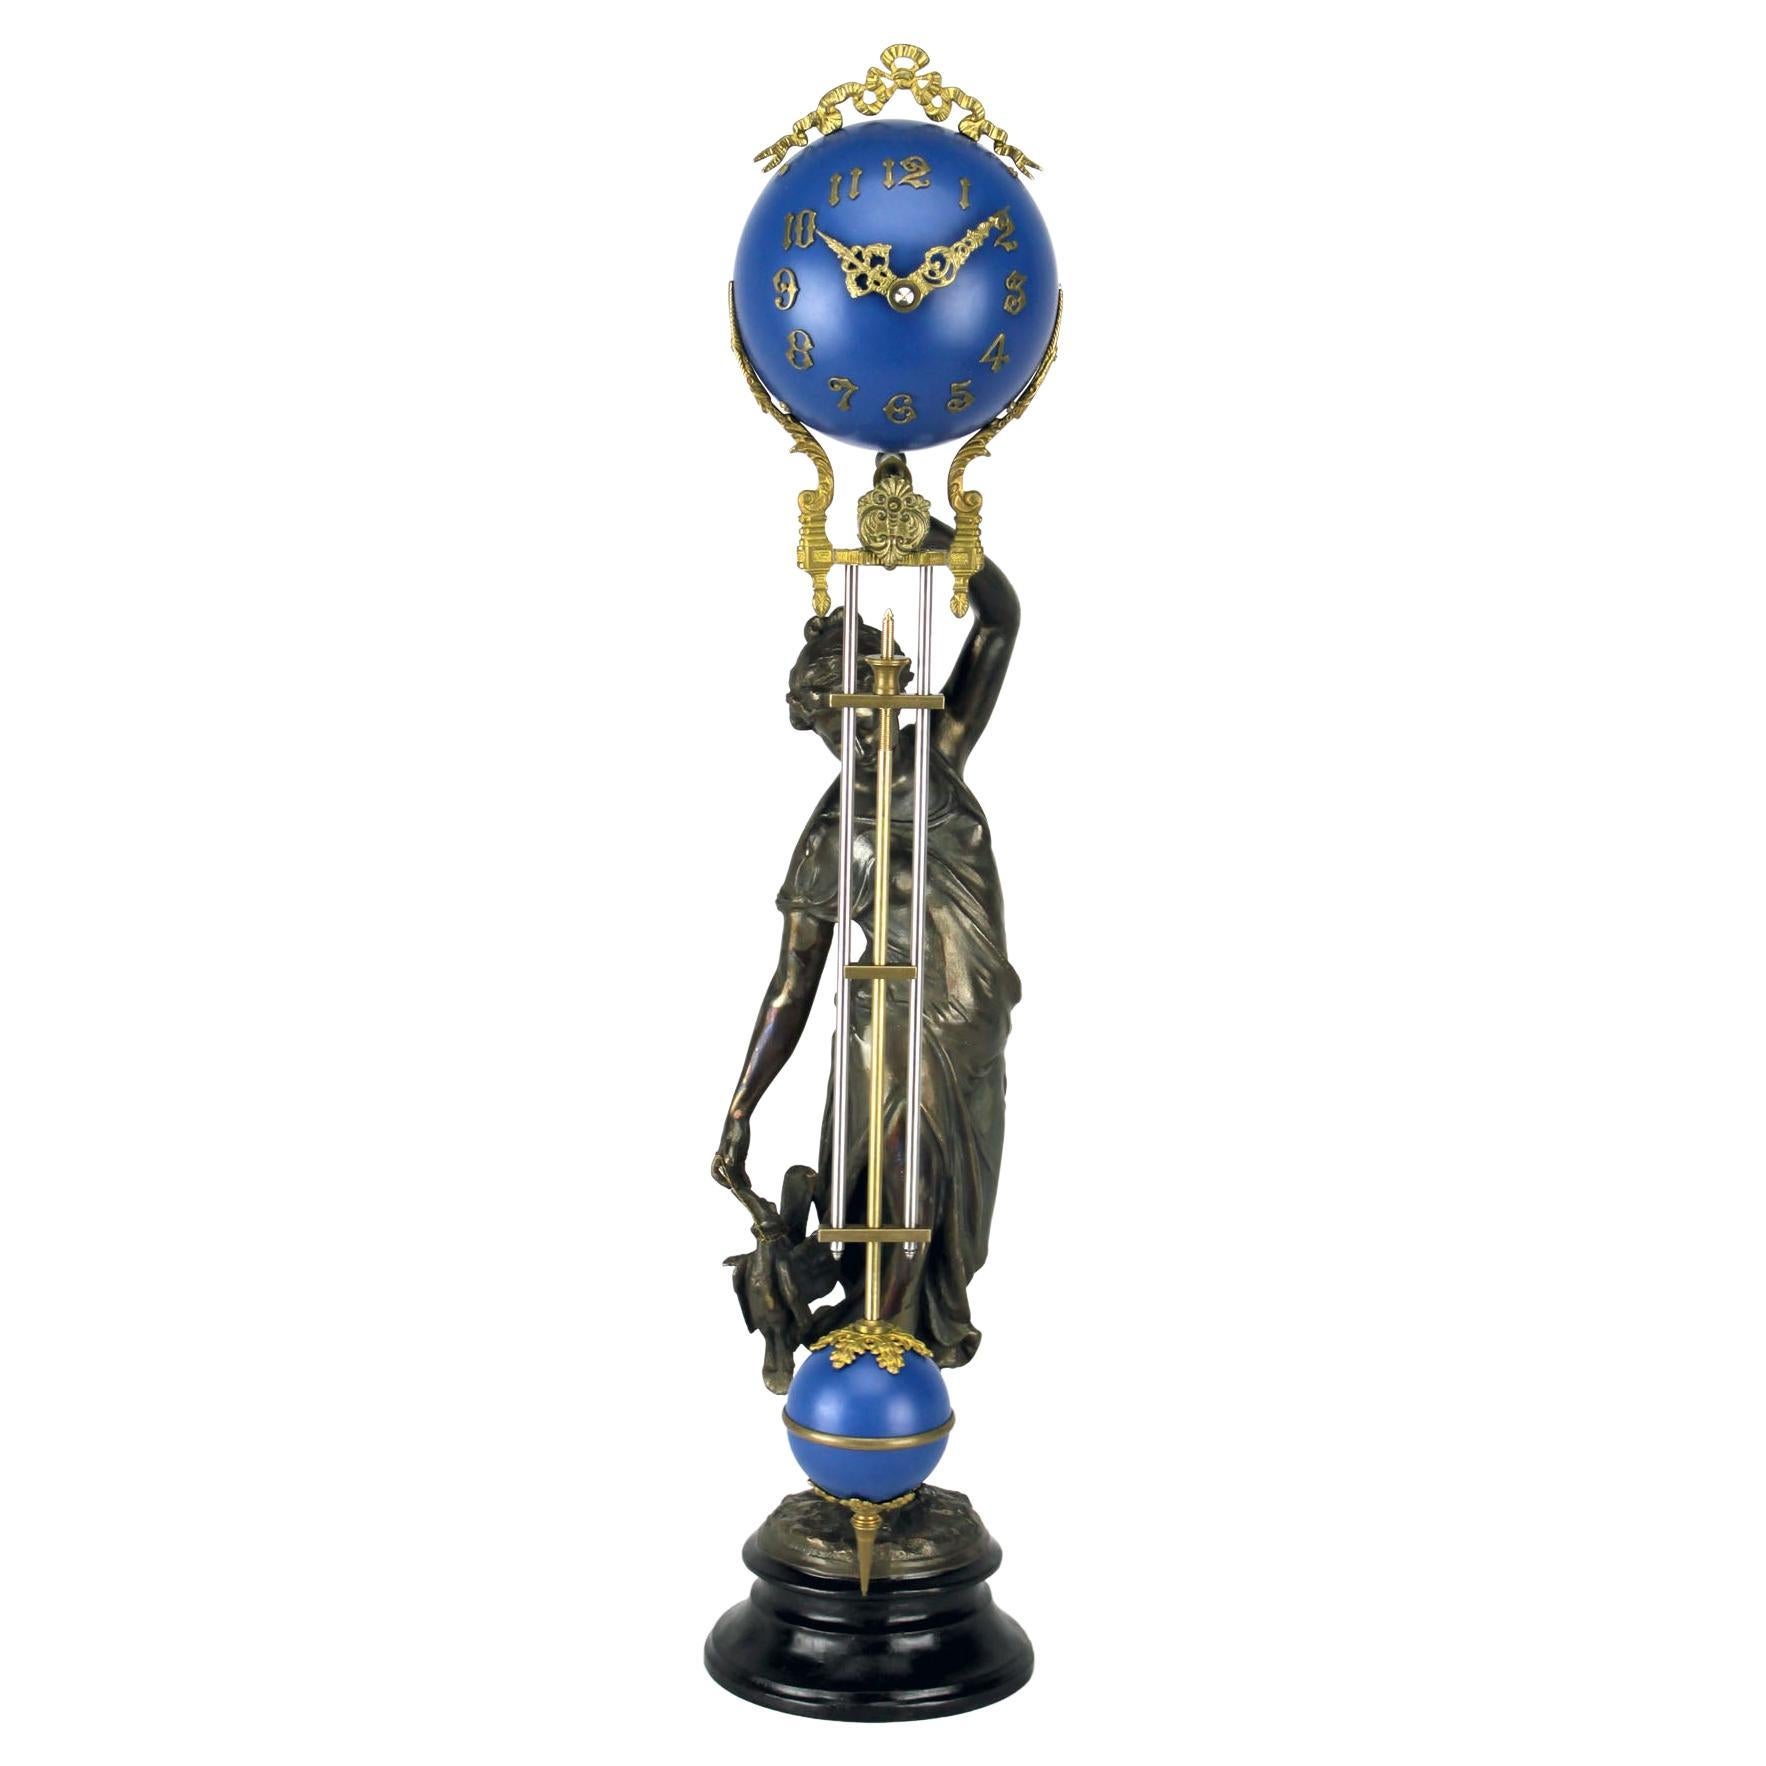 Mystery Cobalt Blue 4"" Ball 8 Day Brass Huntress Lady Statue Swinging Clock